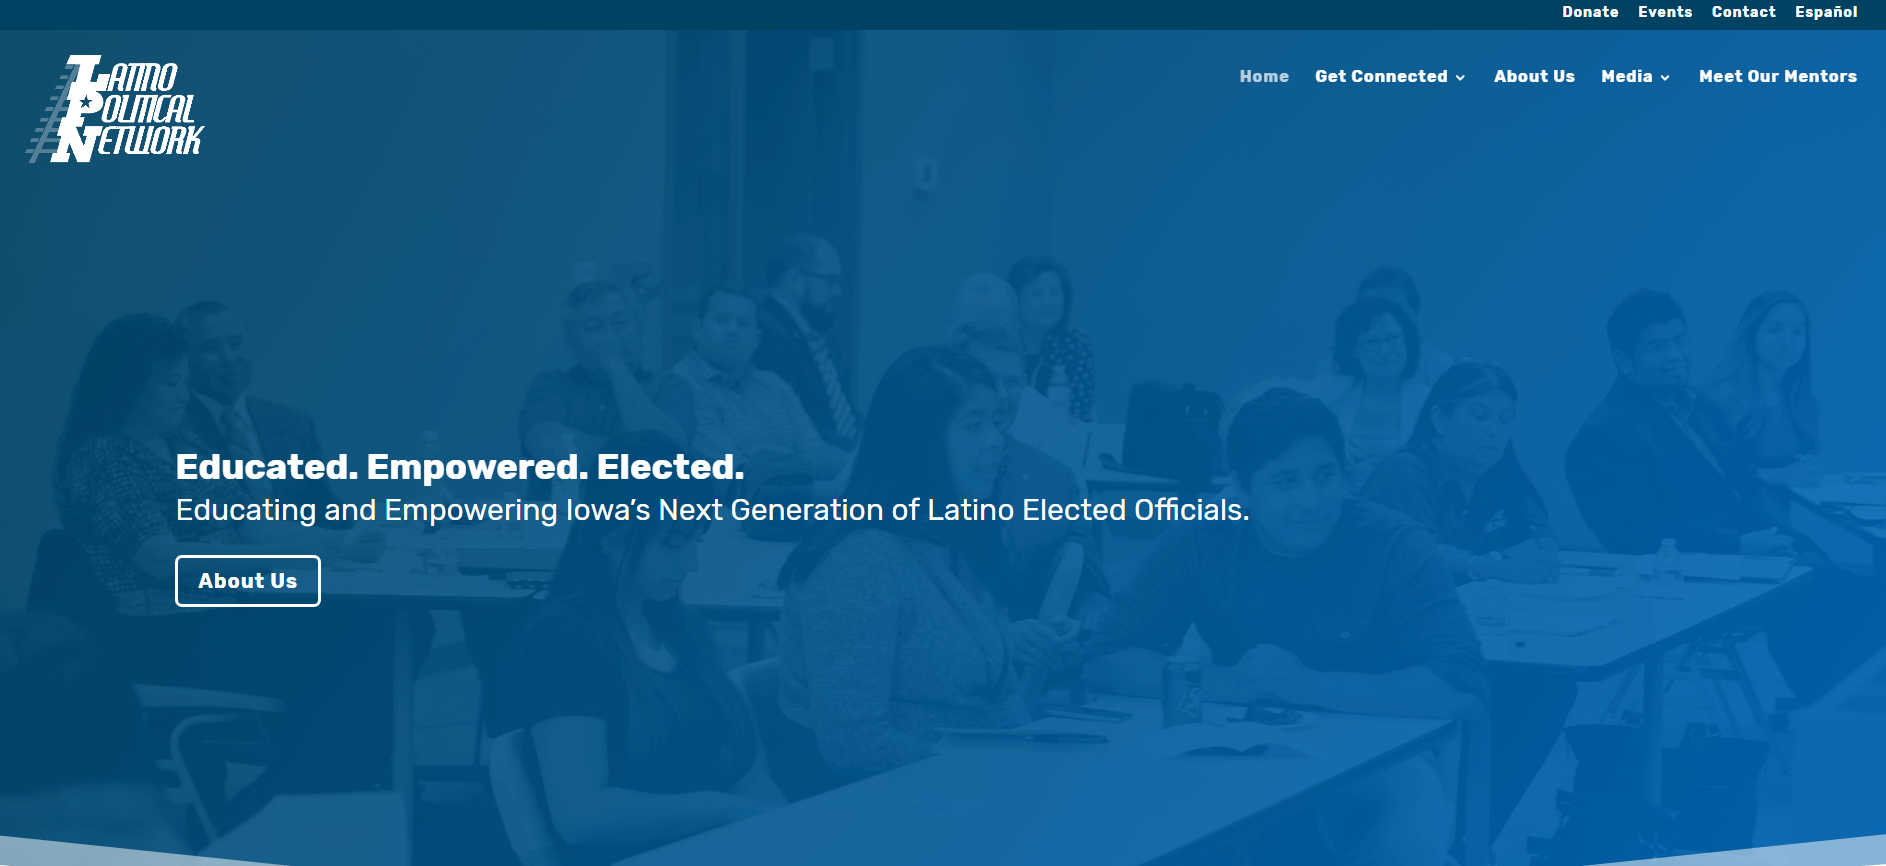 dsmhack 2018 webspec latino political network